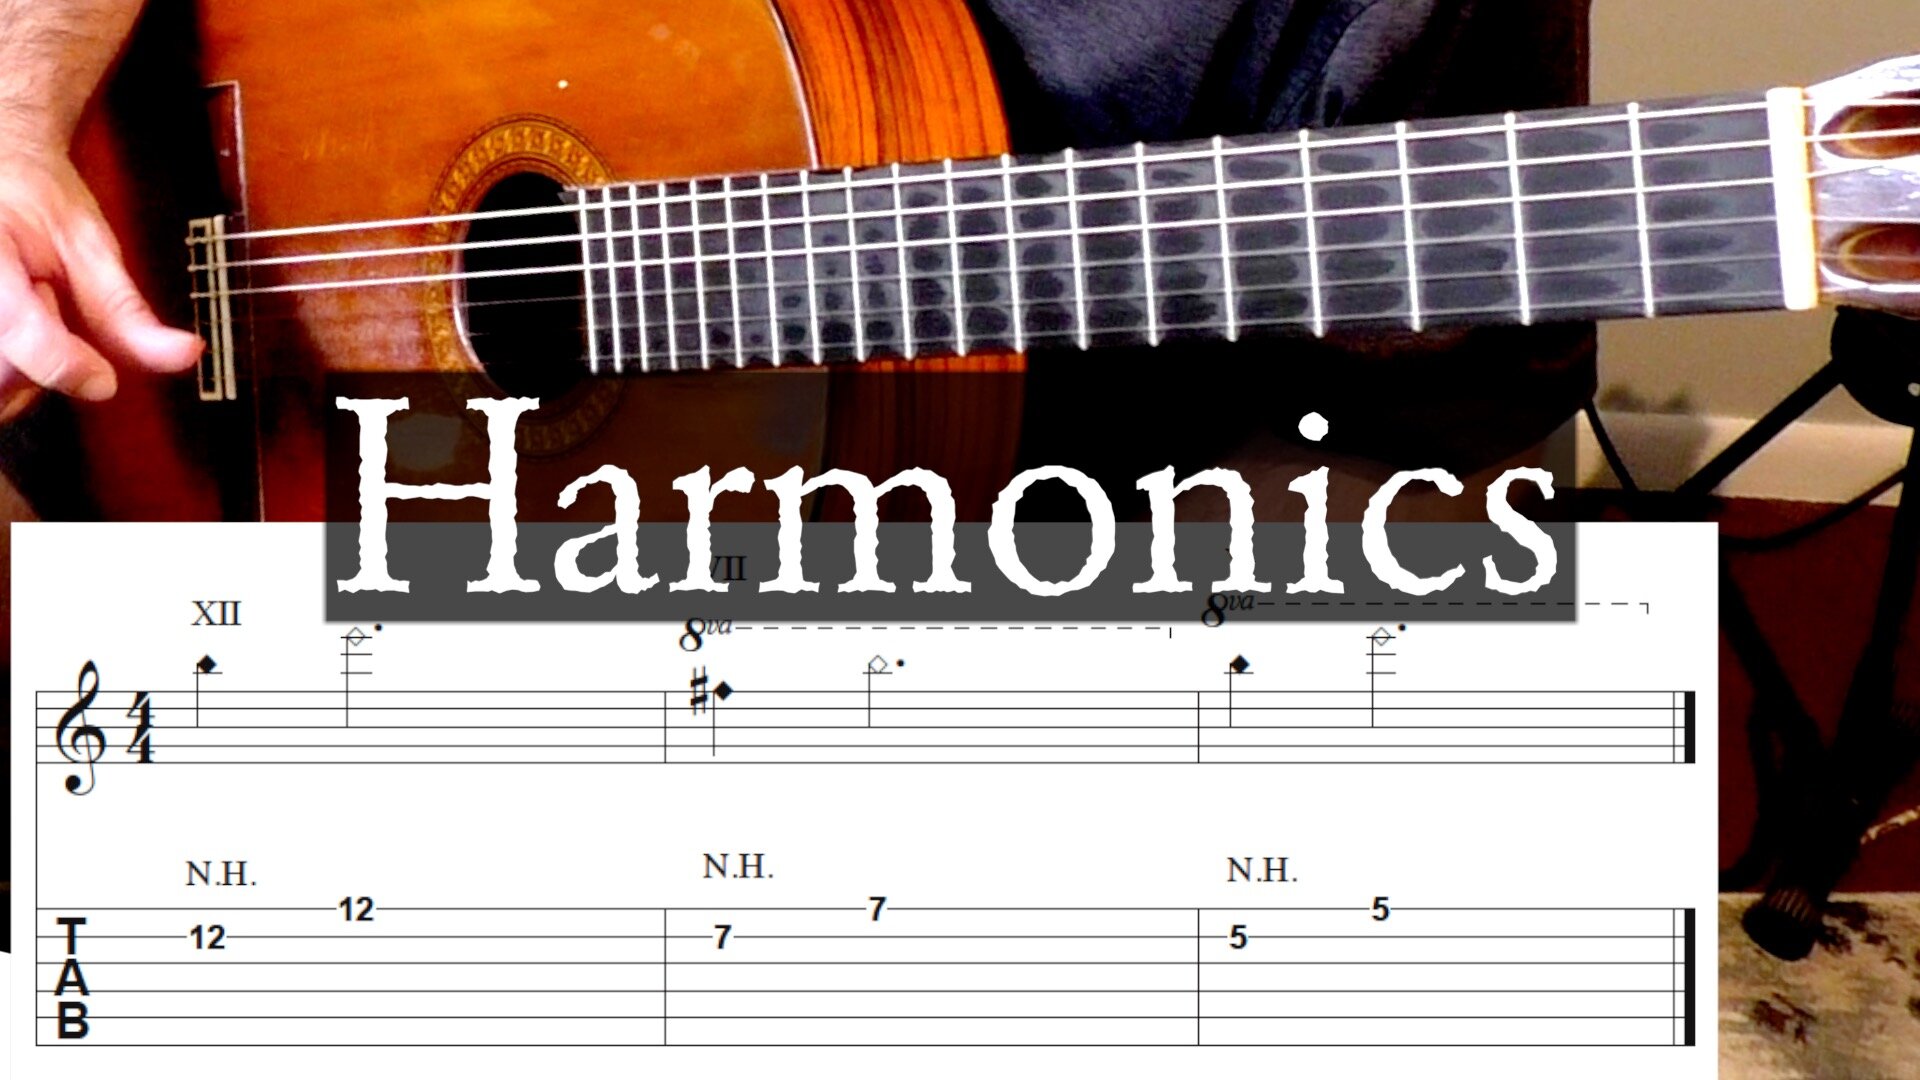 Harmonics Thumbnail.jpg